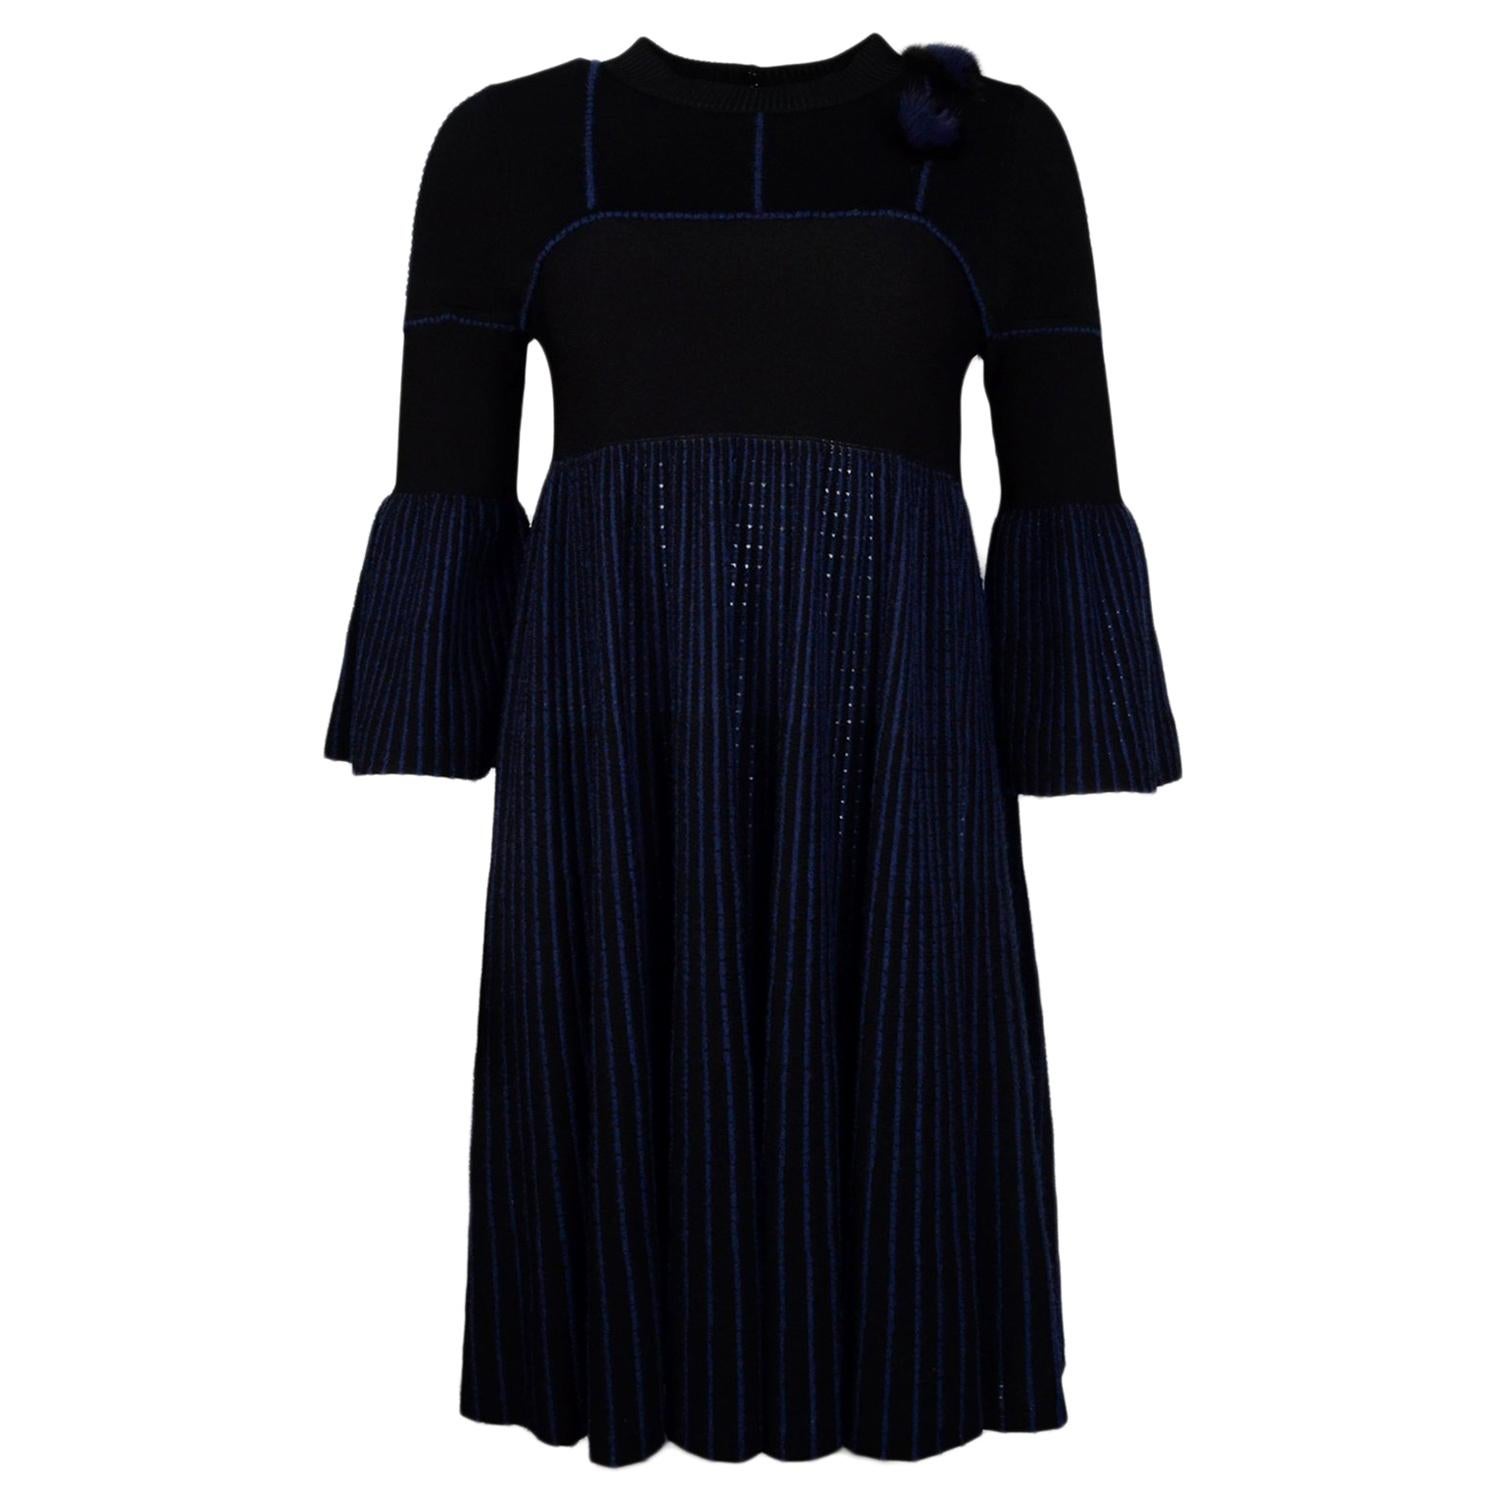 Fendi Navy/Black Knit Dress W/ Mink Fur Heart Detail Sz IT38/US2